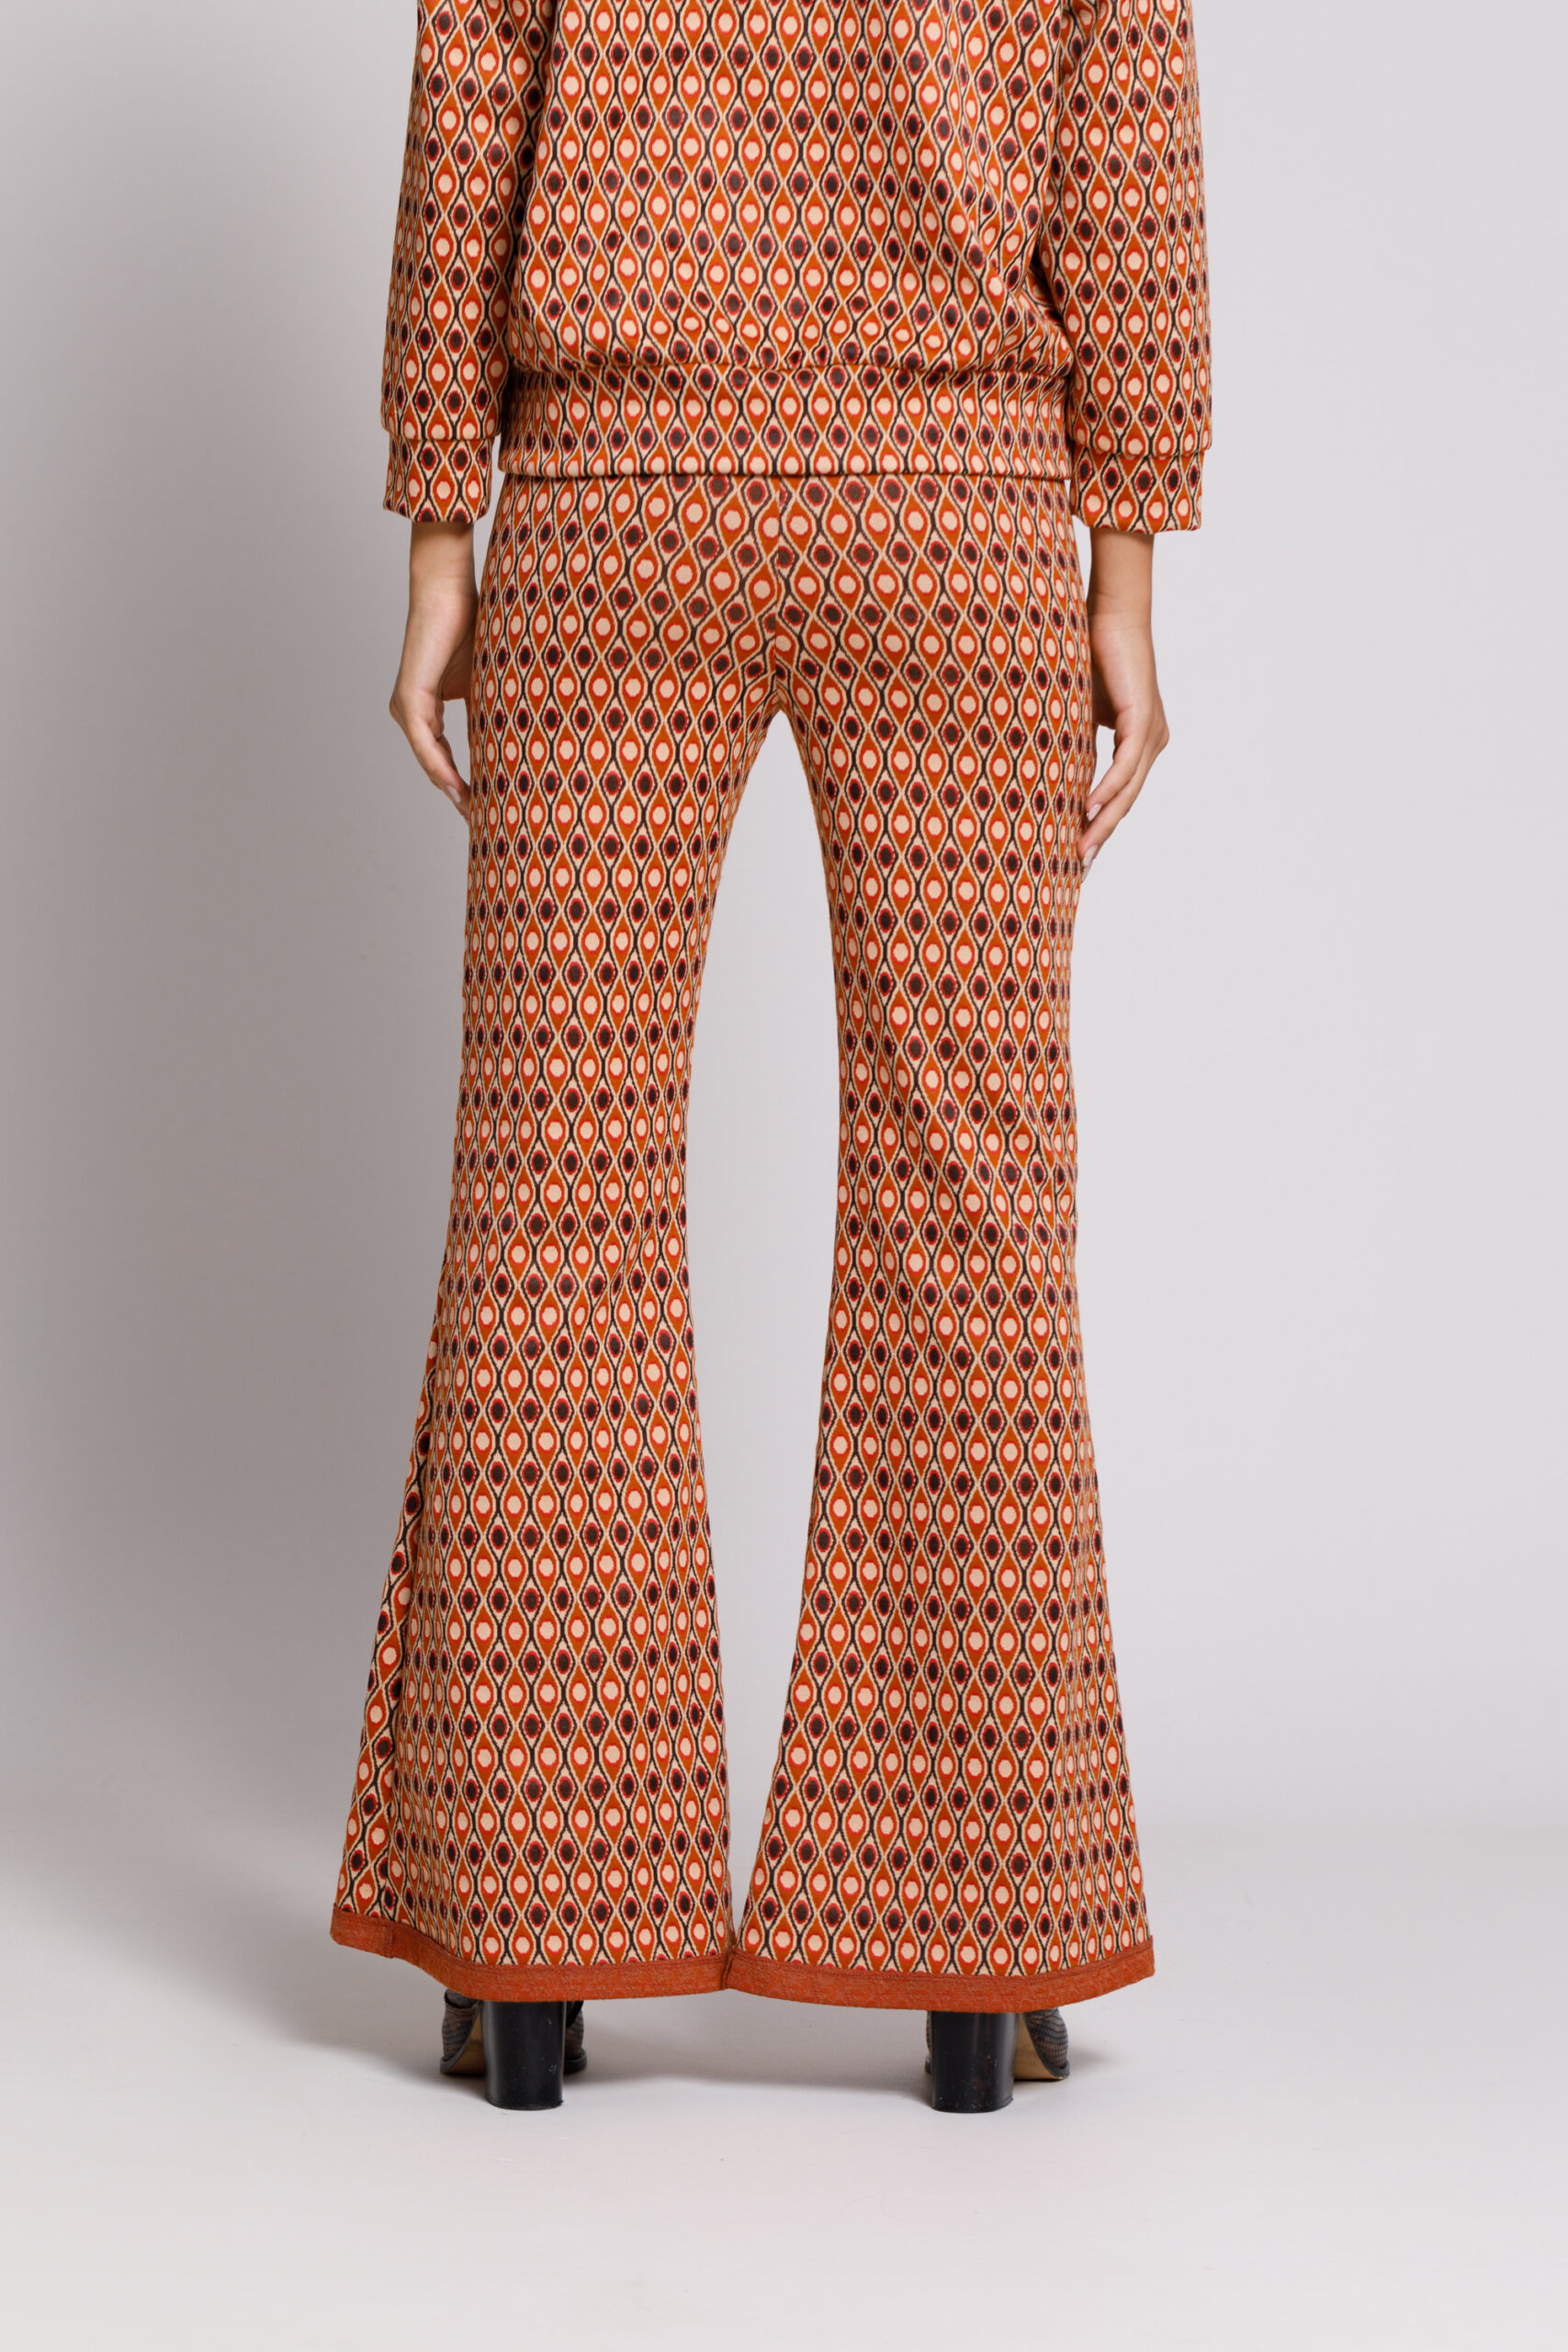 Pantalon ARLO 23 evazat cu imprimeu geometric. Materiale naturale, design unicat, cu broderie si aplicatii handmade